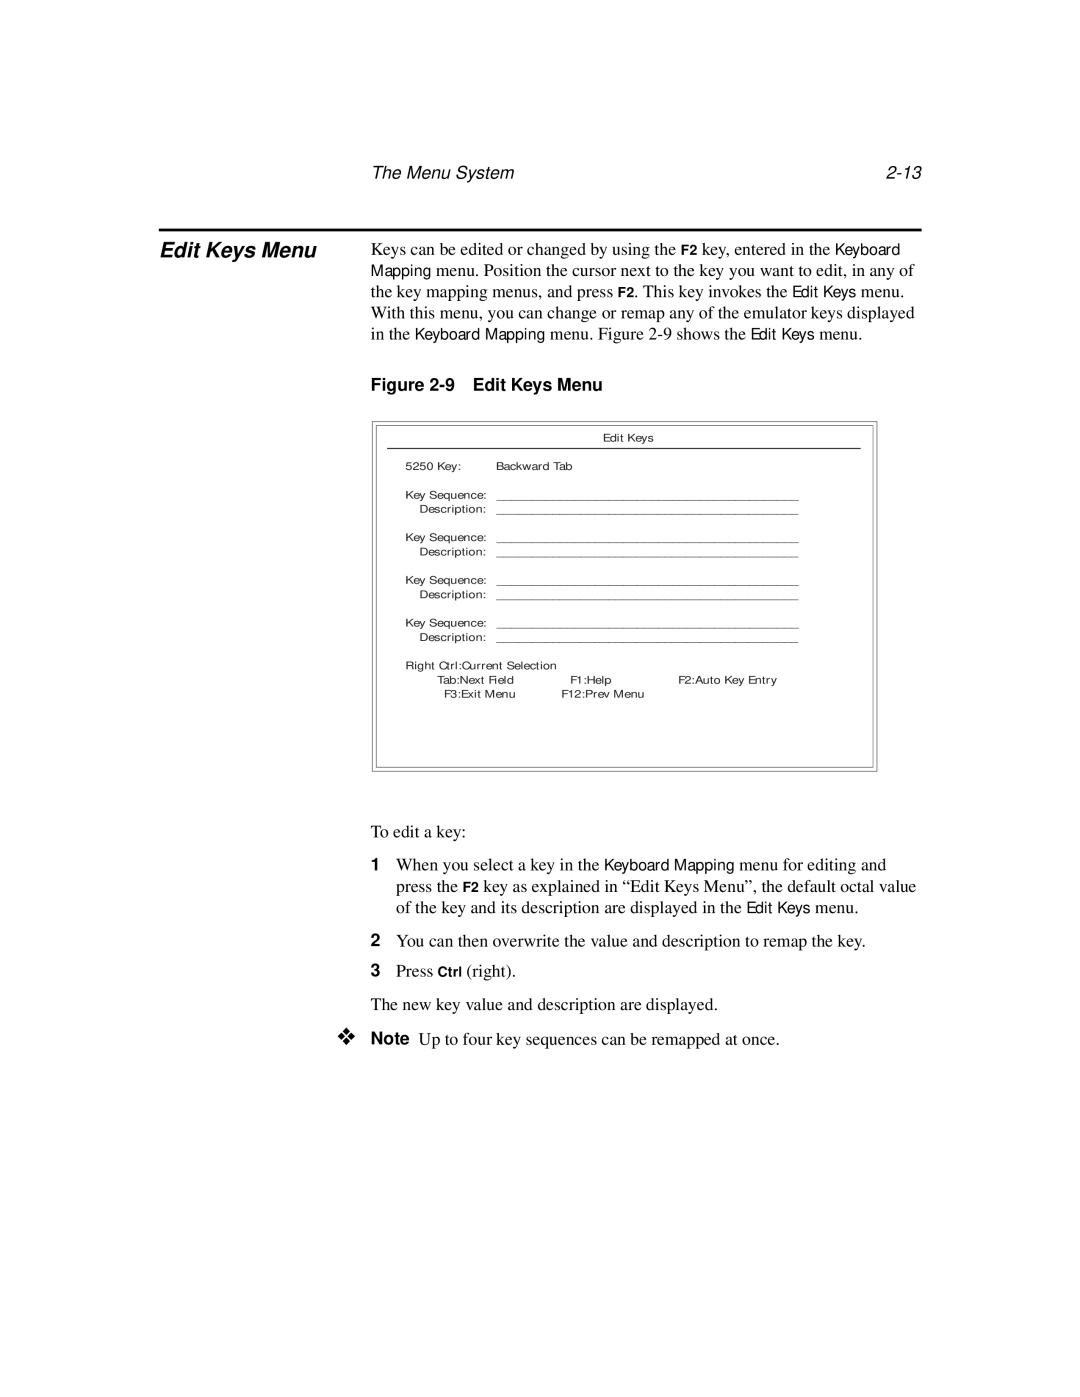 IBM TN5250 manual 2-13, The Menu System, 9 Edit Keys Menu 